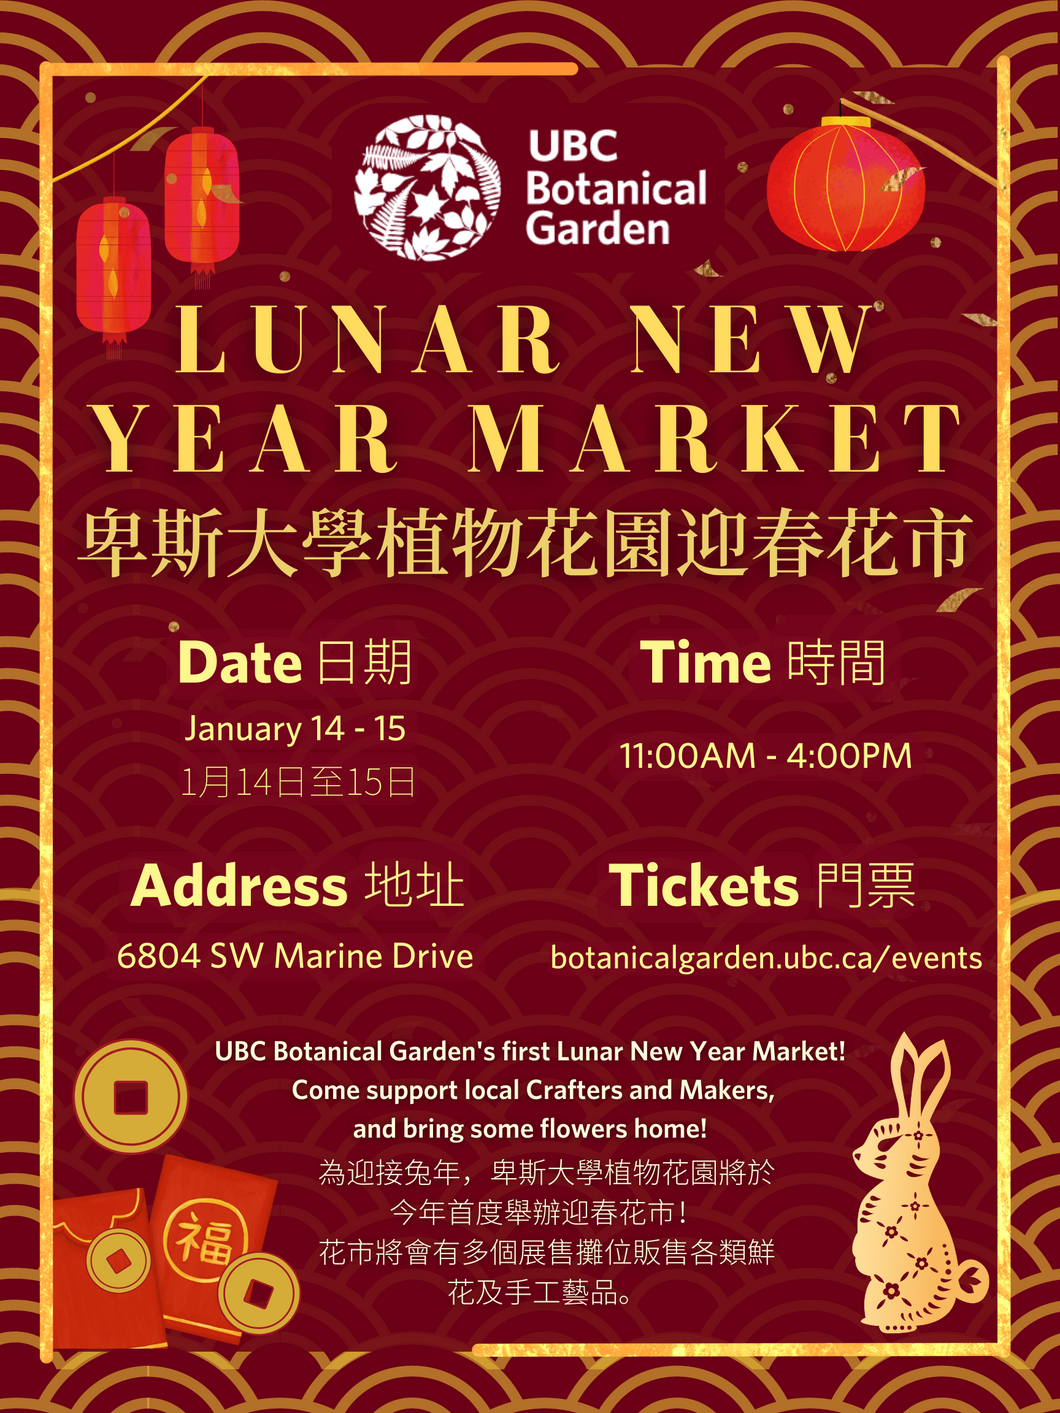 Lunar New Year Market Vendor